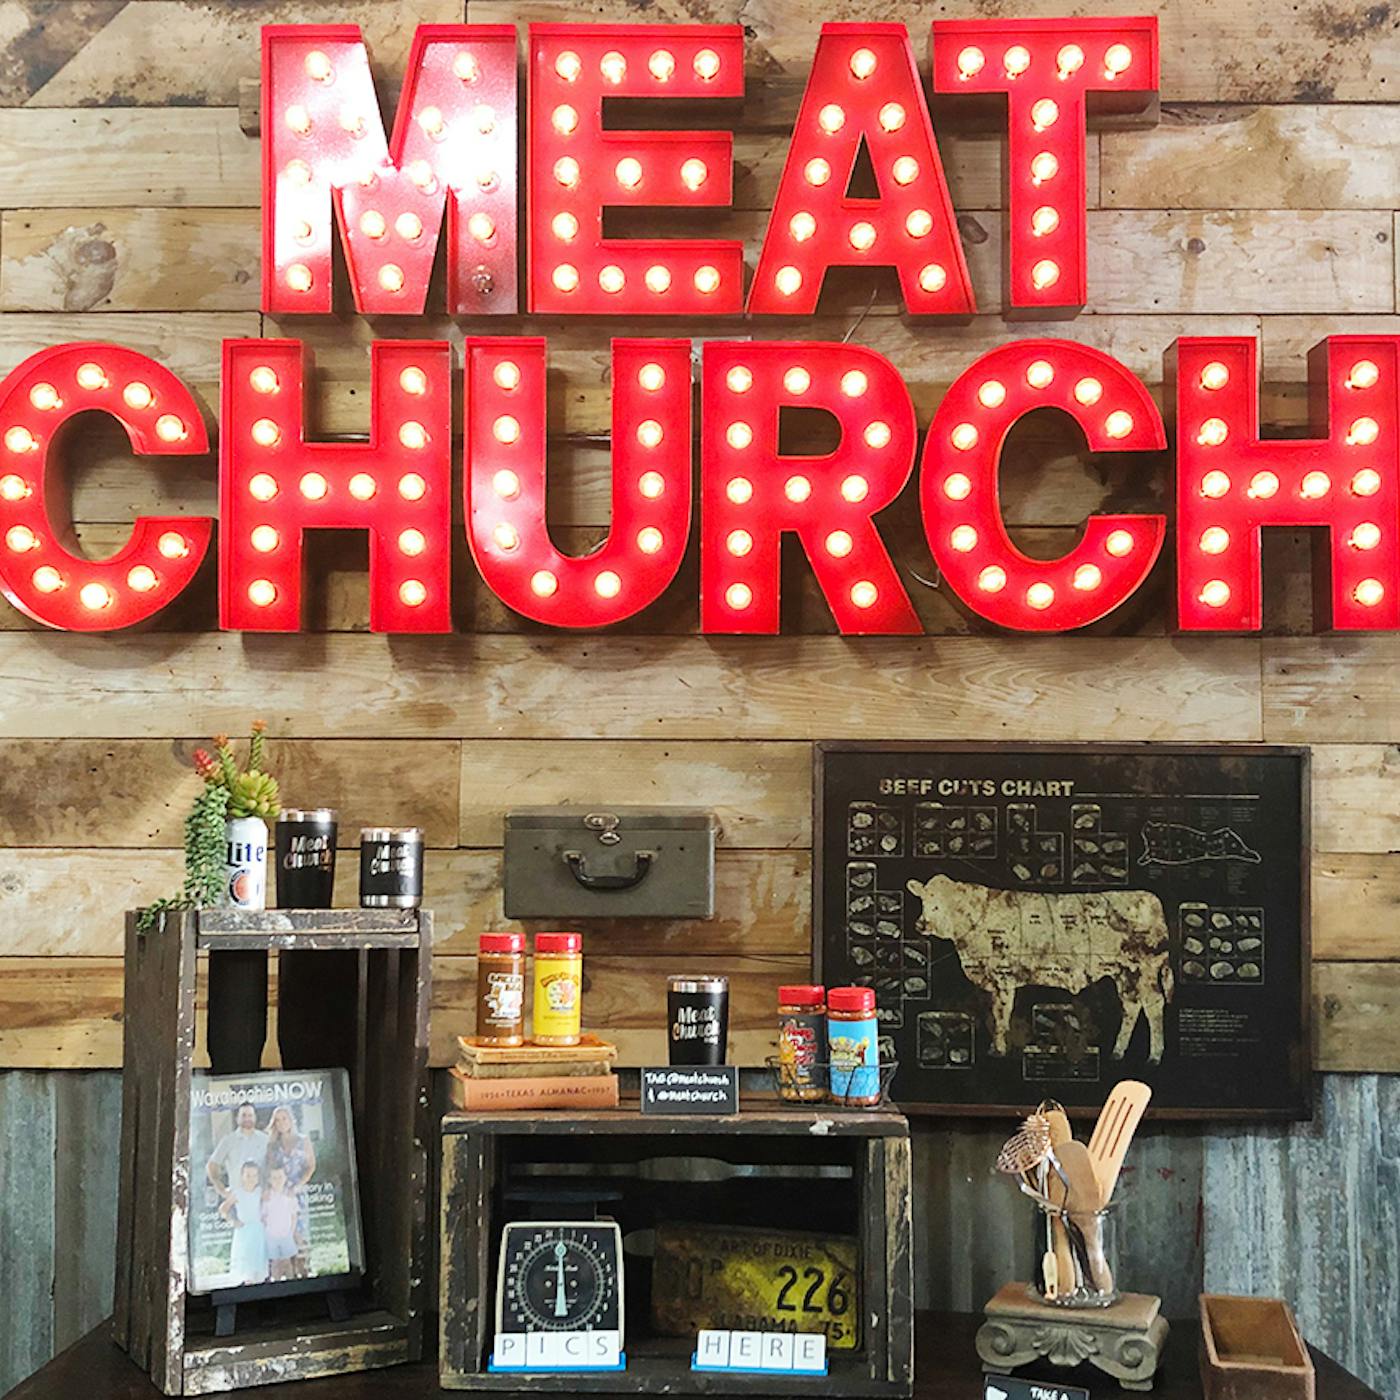 https://img.texasmonthly.com/2019/08/Meat-Church-BBQ.jpg?auto=compress&crop=faces&fit=crop&fm=jpg&h=1400&ixlib=php-3.3.1&q=45&w=1400